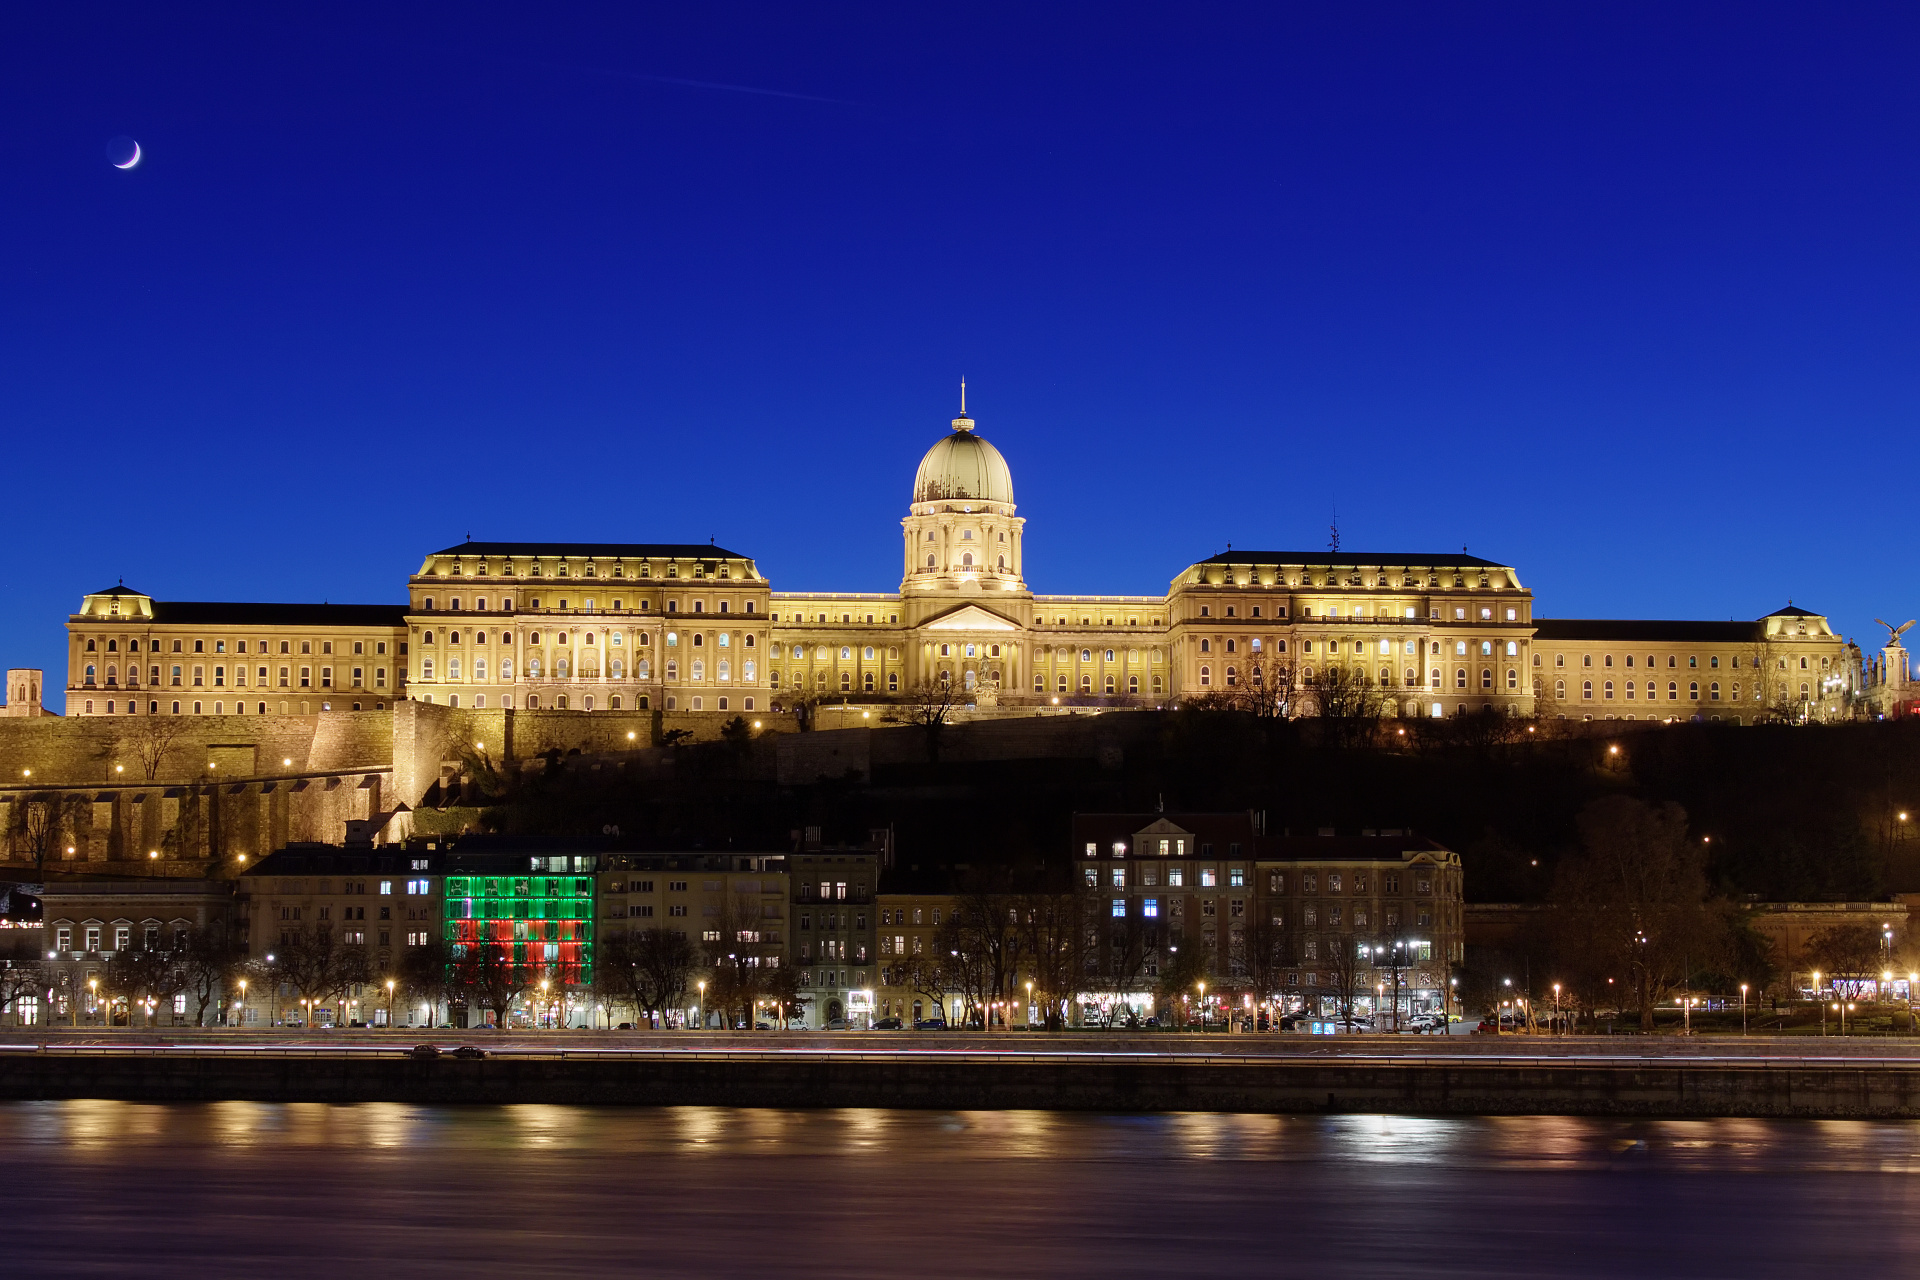 Buda Castle (Travels » Budapest » Budapest at Night)